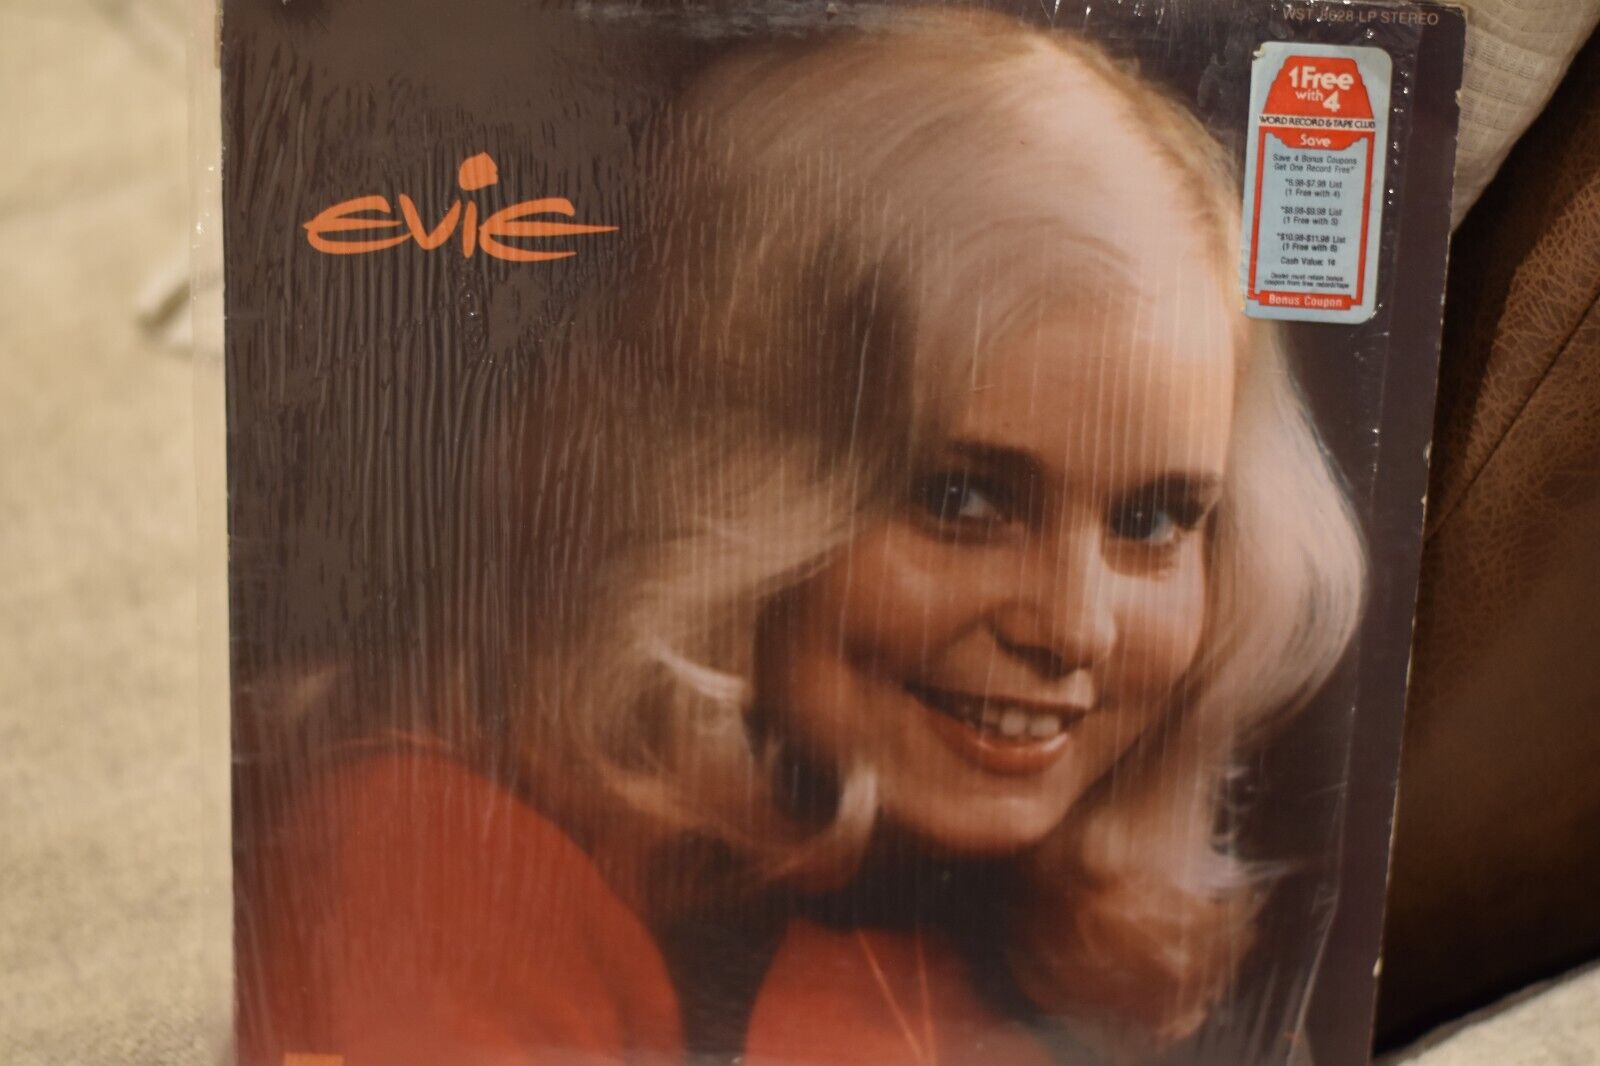 Evie Tornquist Lot 2 Evie Self-Titled Christmas Album Vinyl LP Record Gospel